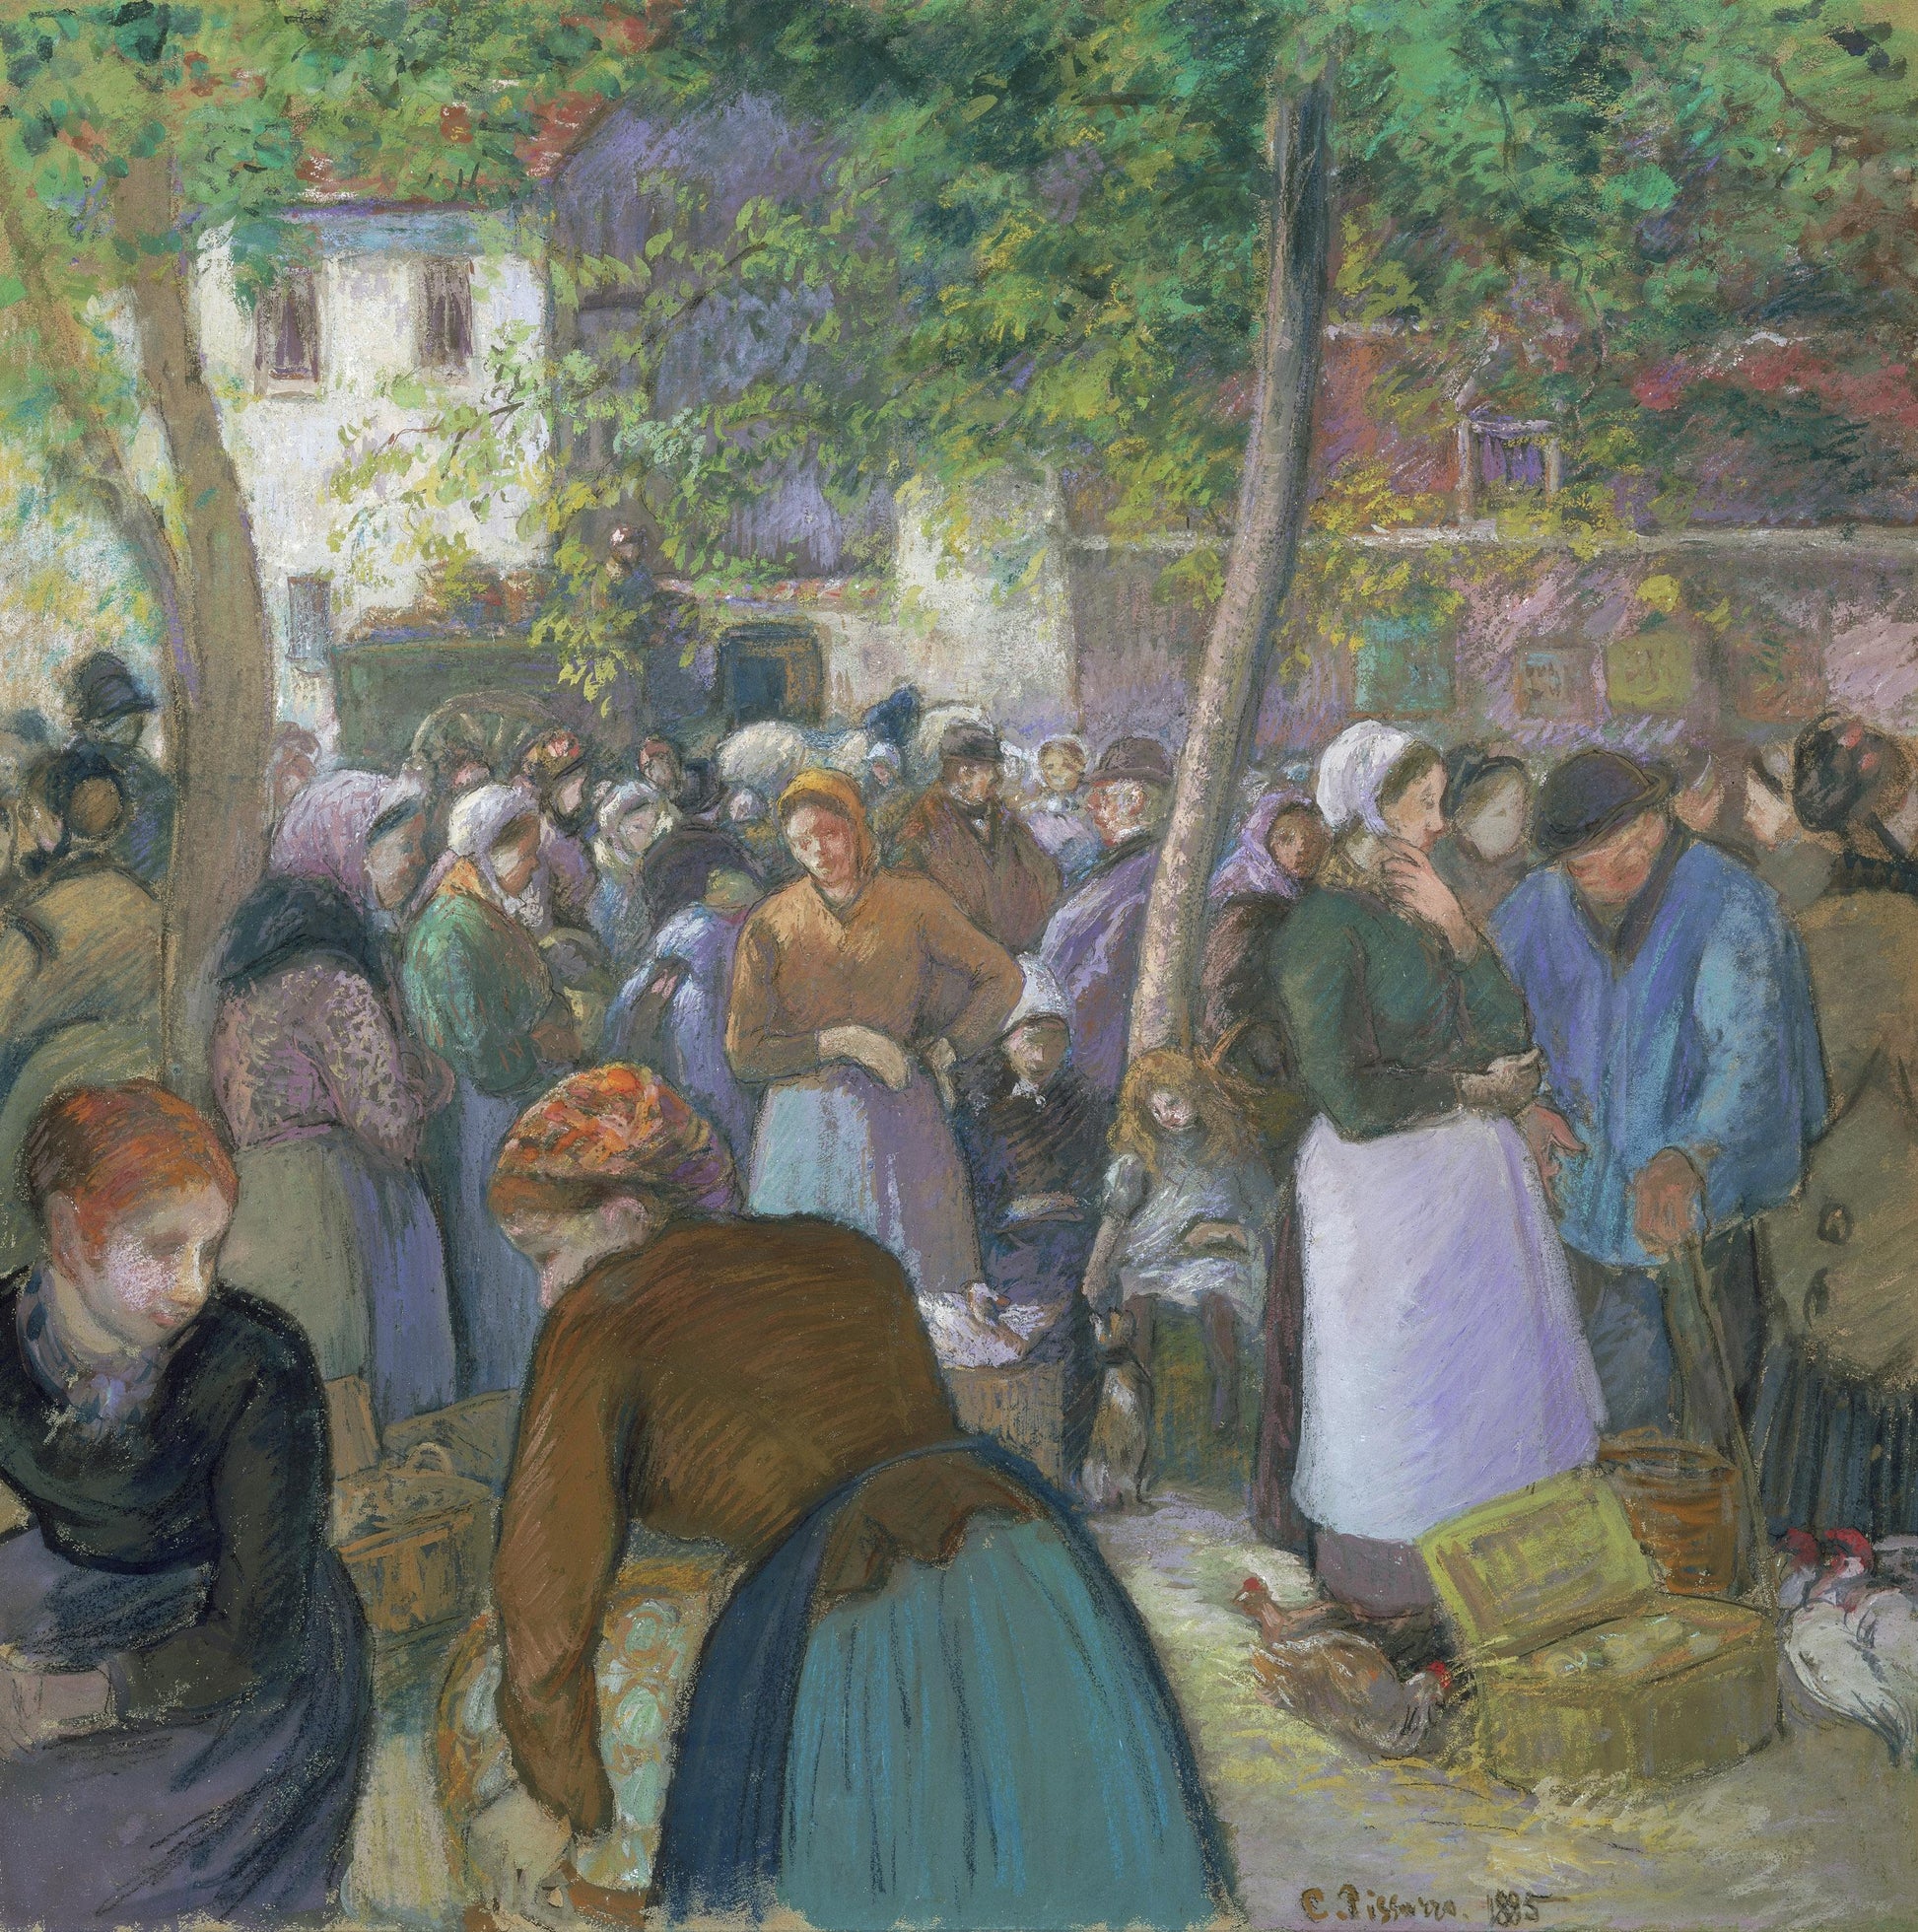 Le marché de volaille, Gisors - Camille Pissarro